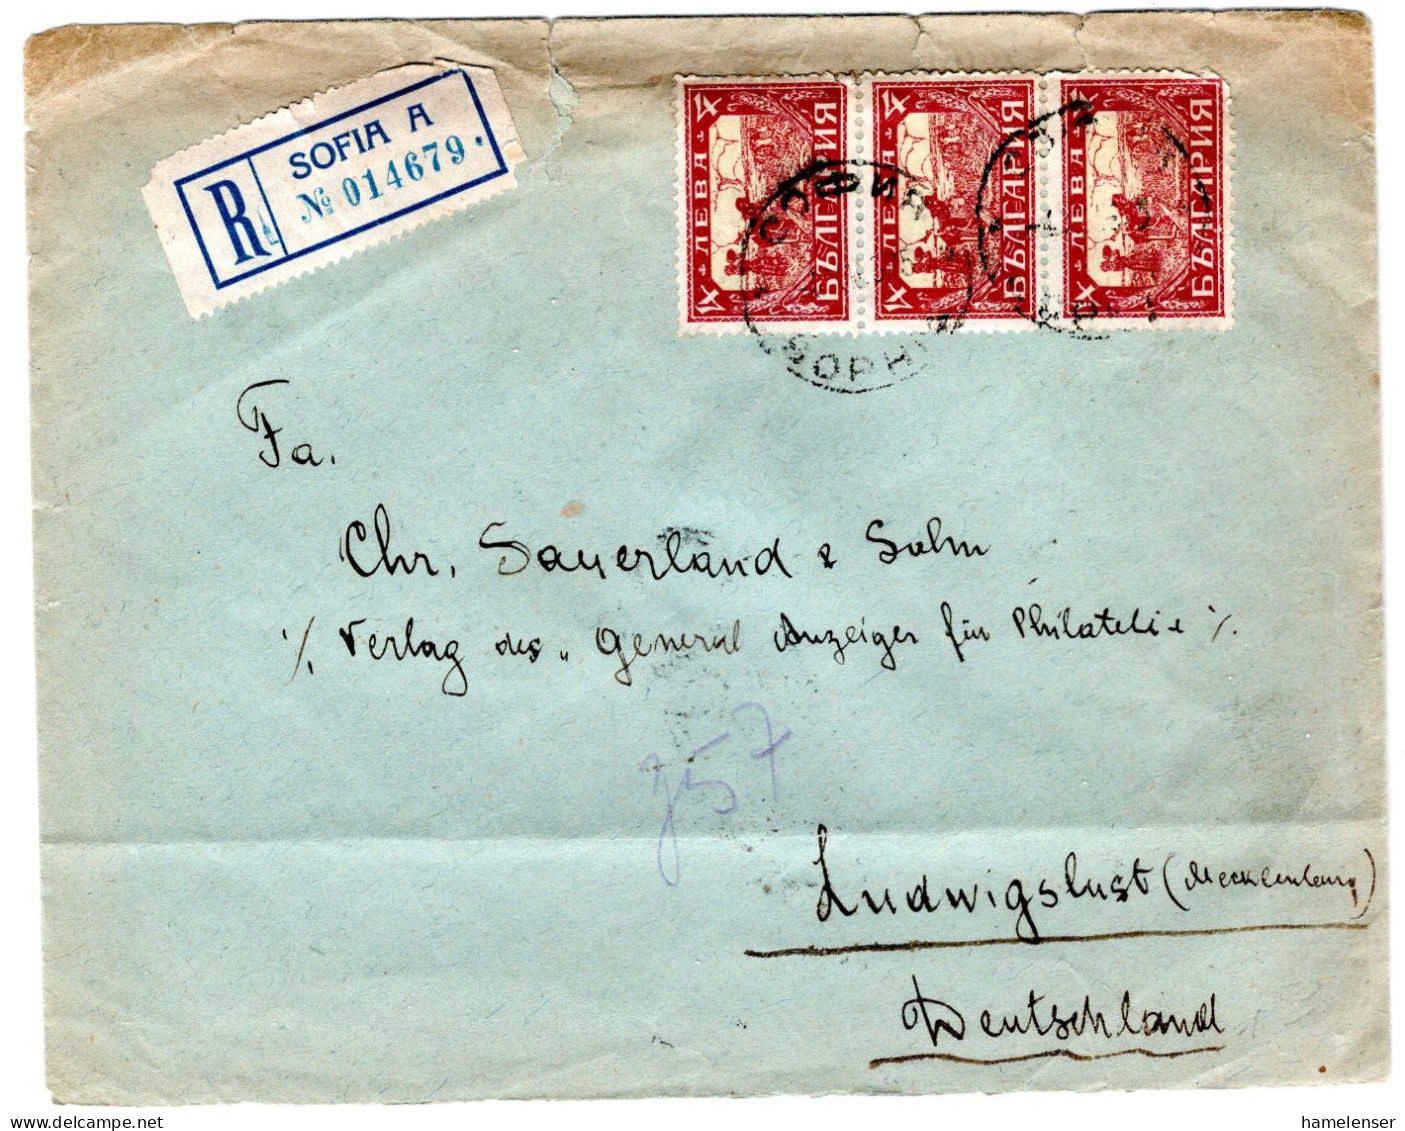 L64883 - Bulgarien - 1925 - 3@4L Landwirtschaft A R-Bf SOFIA -> LUDWIGSLUST (Deutschland), Kl Mgl - Briefe U. Dokumente